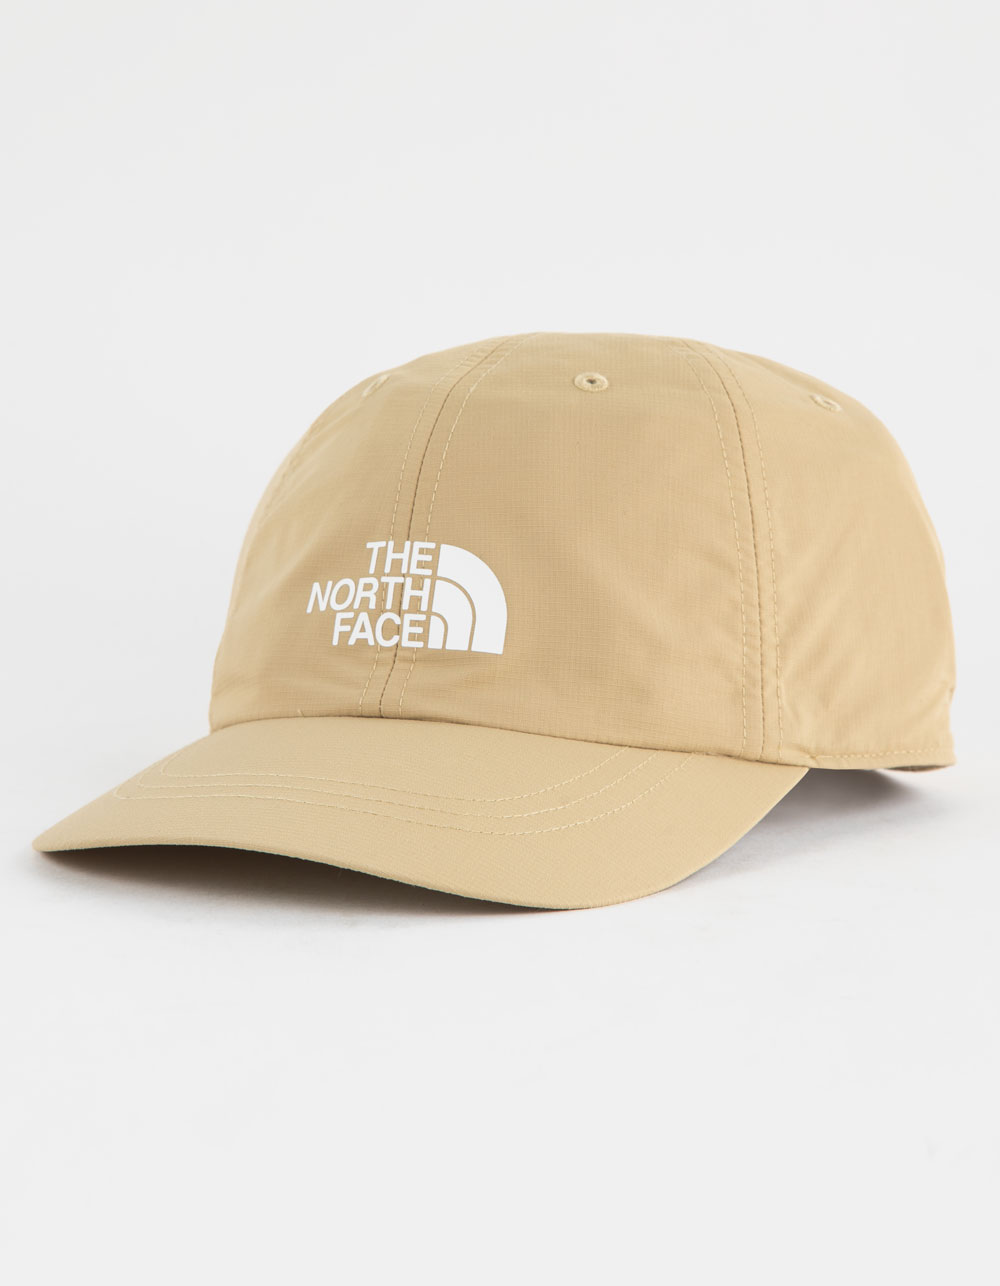 THE NORTH FACE Horizon Strapback Hat